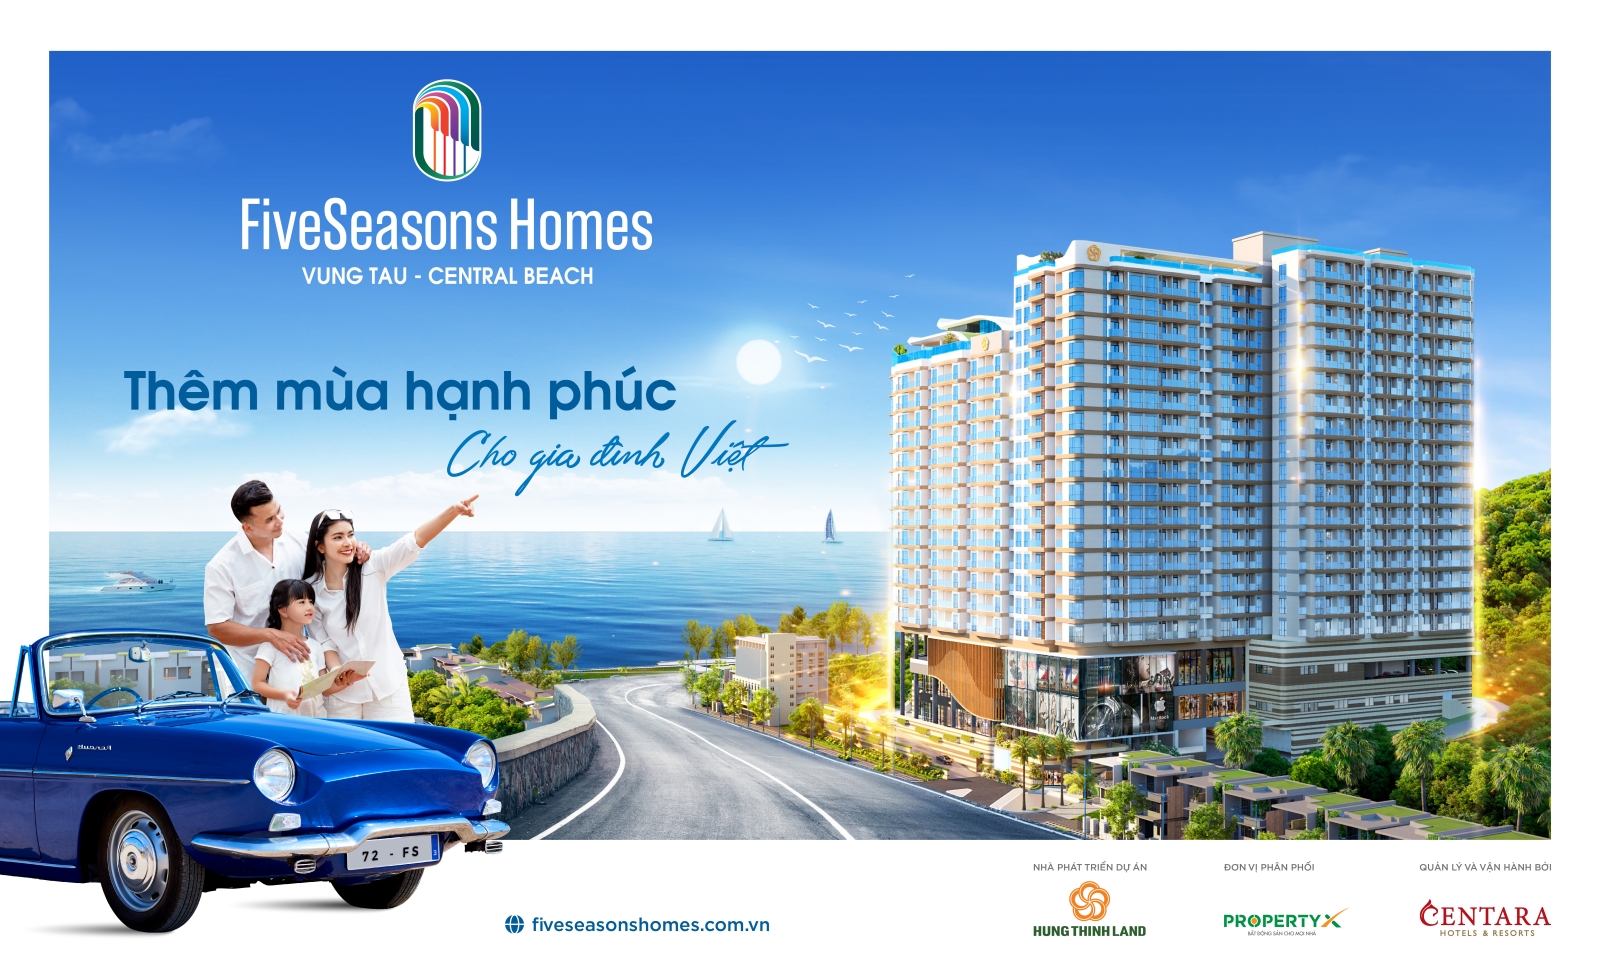 FiveSeasons Homes Vũng Tàu Central Beach